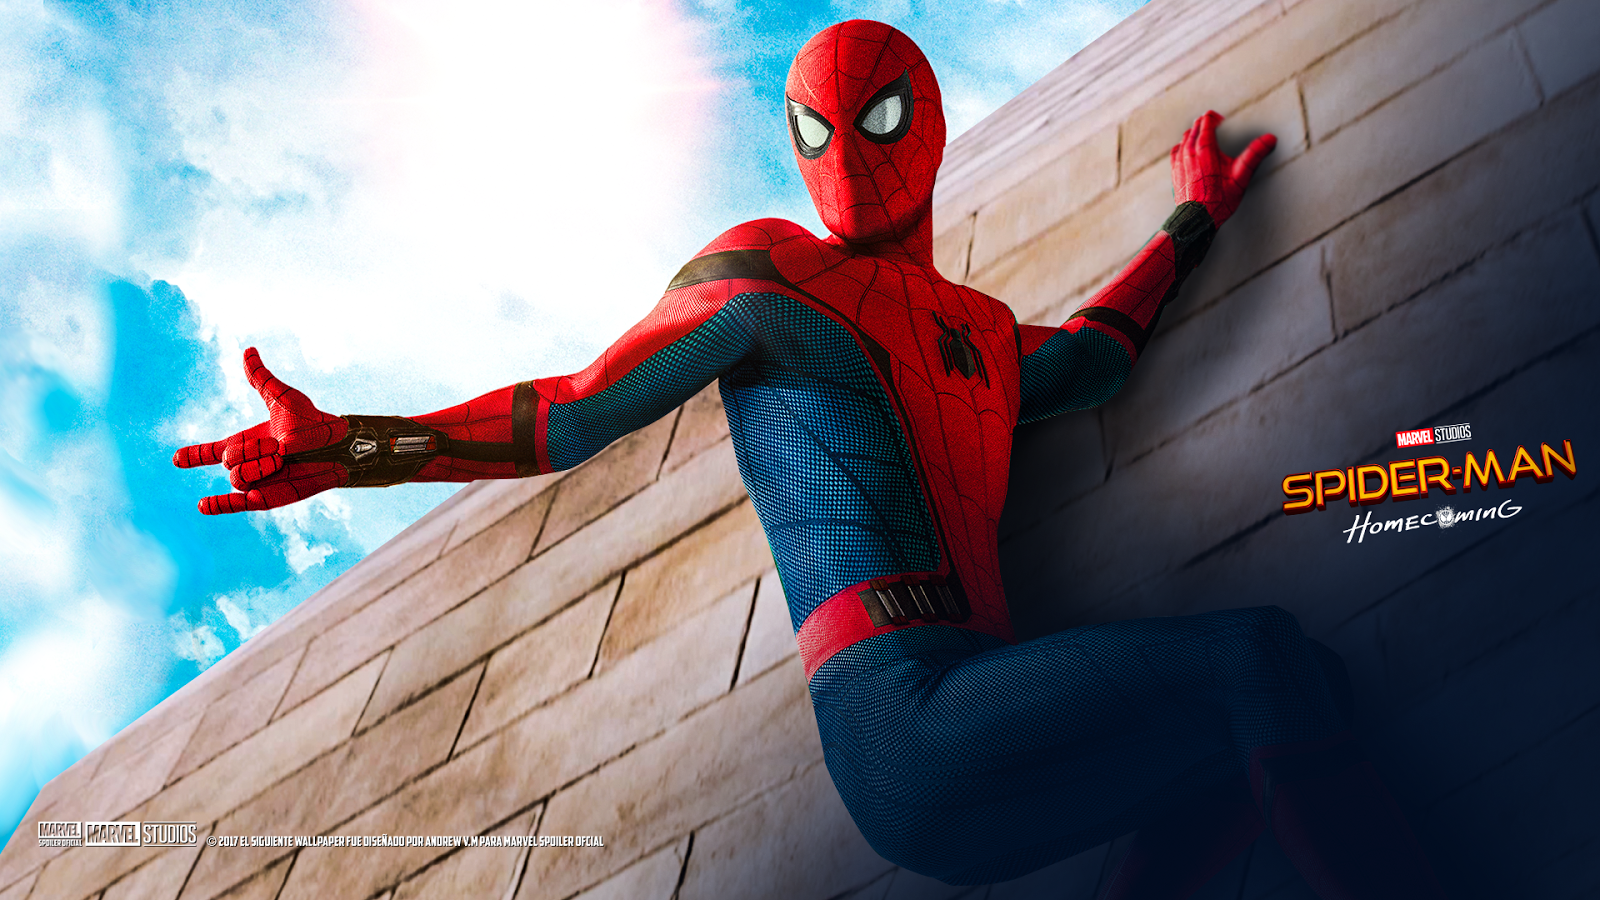 Hd Spiderman Homecoming 2017 Movie Still Wallpapers